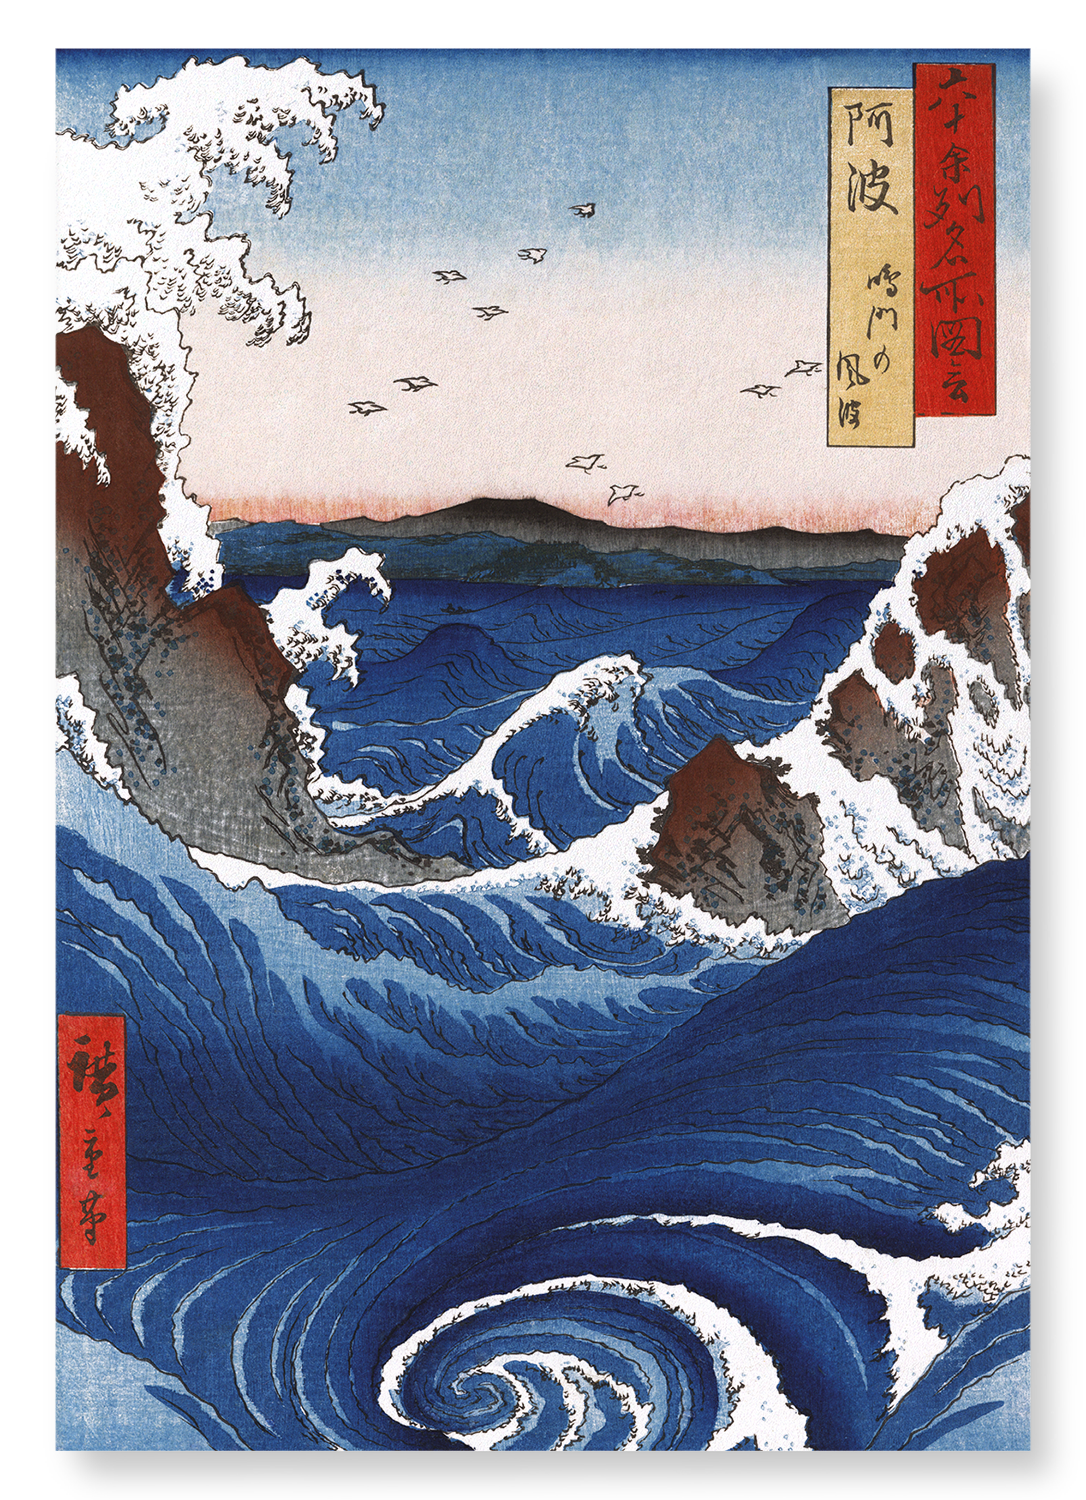 NARUTO WHIRLPOOLS: Japanese Art Print